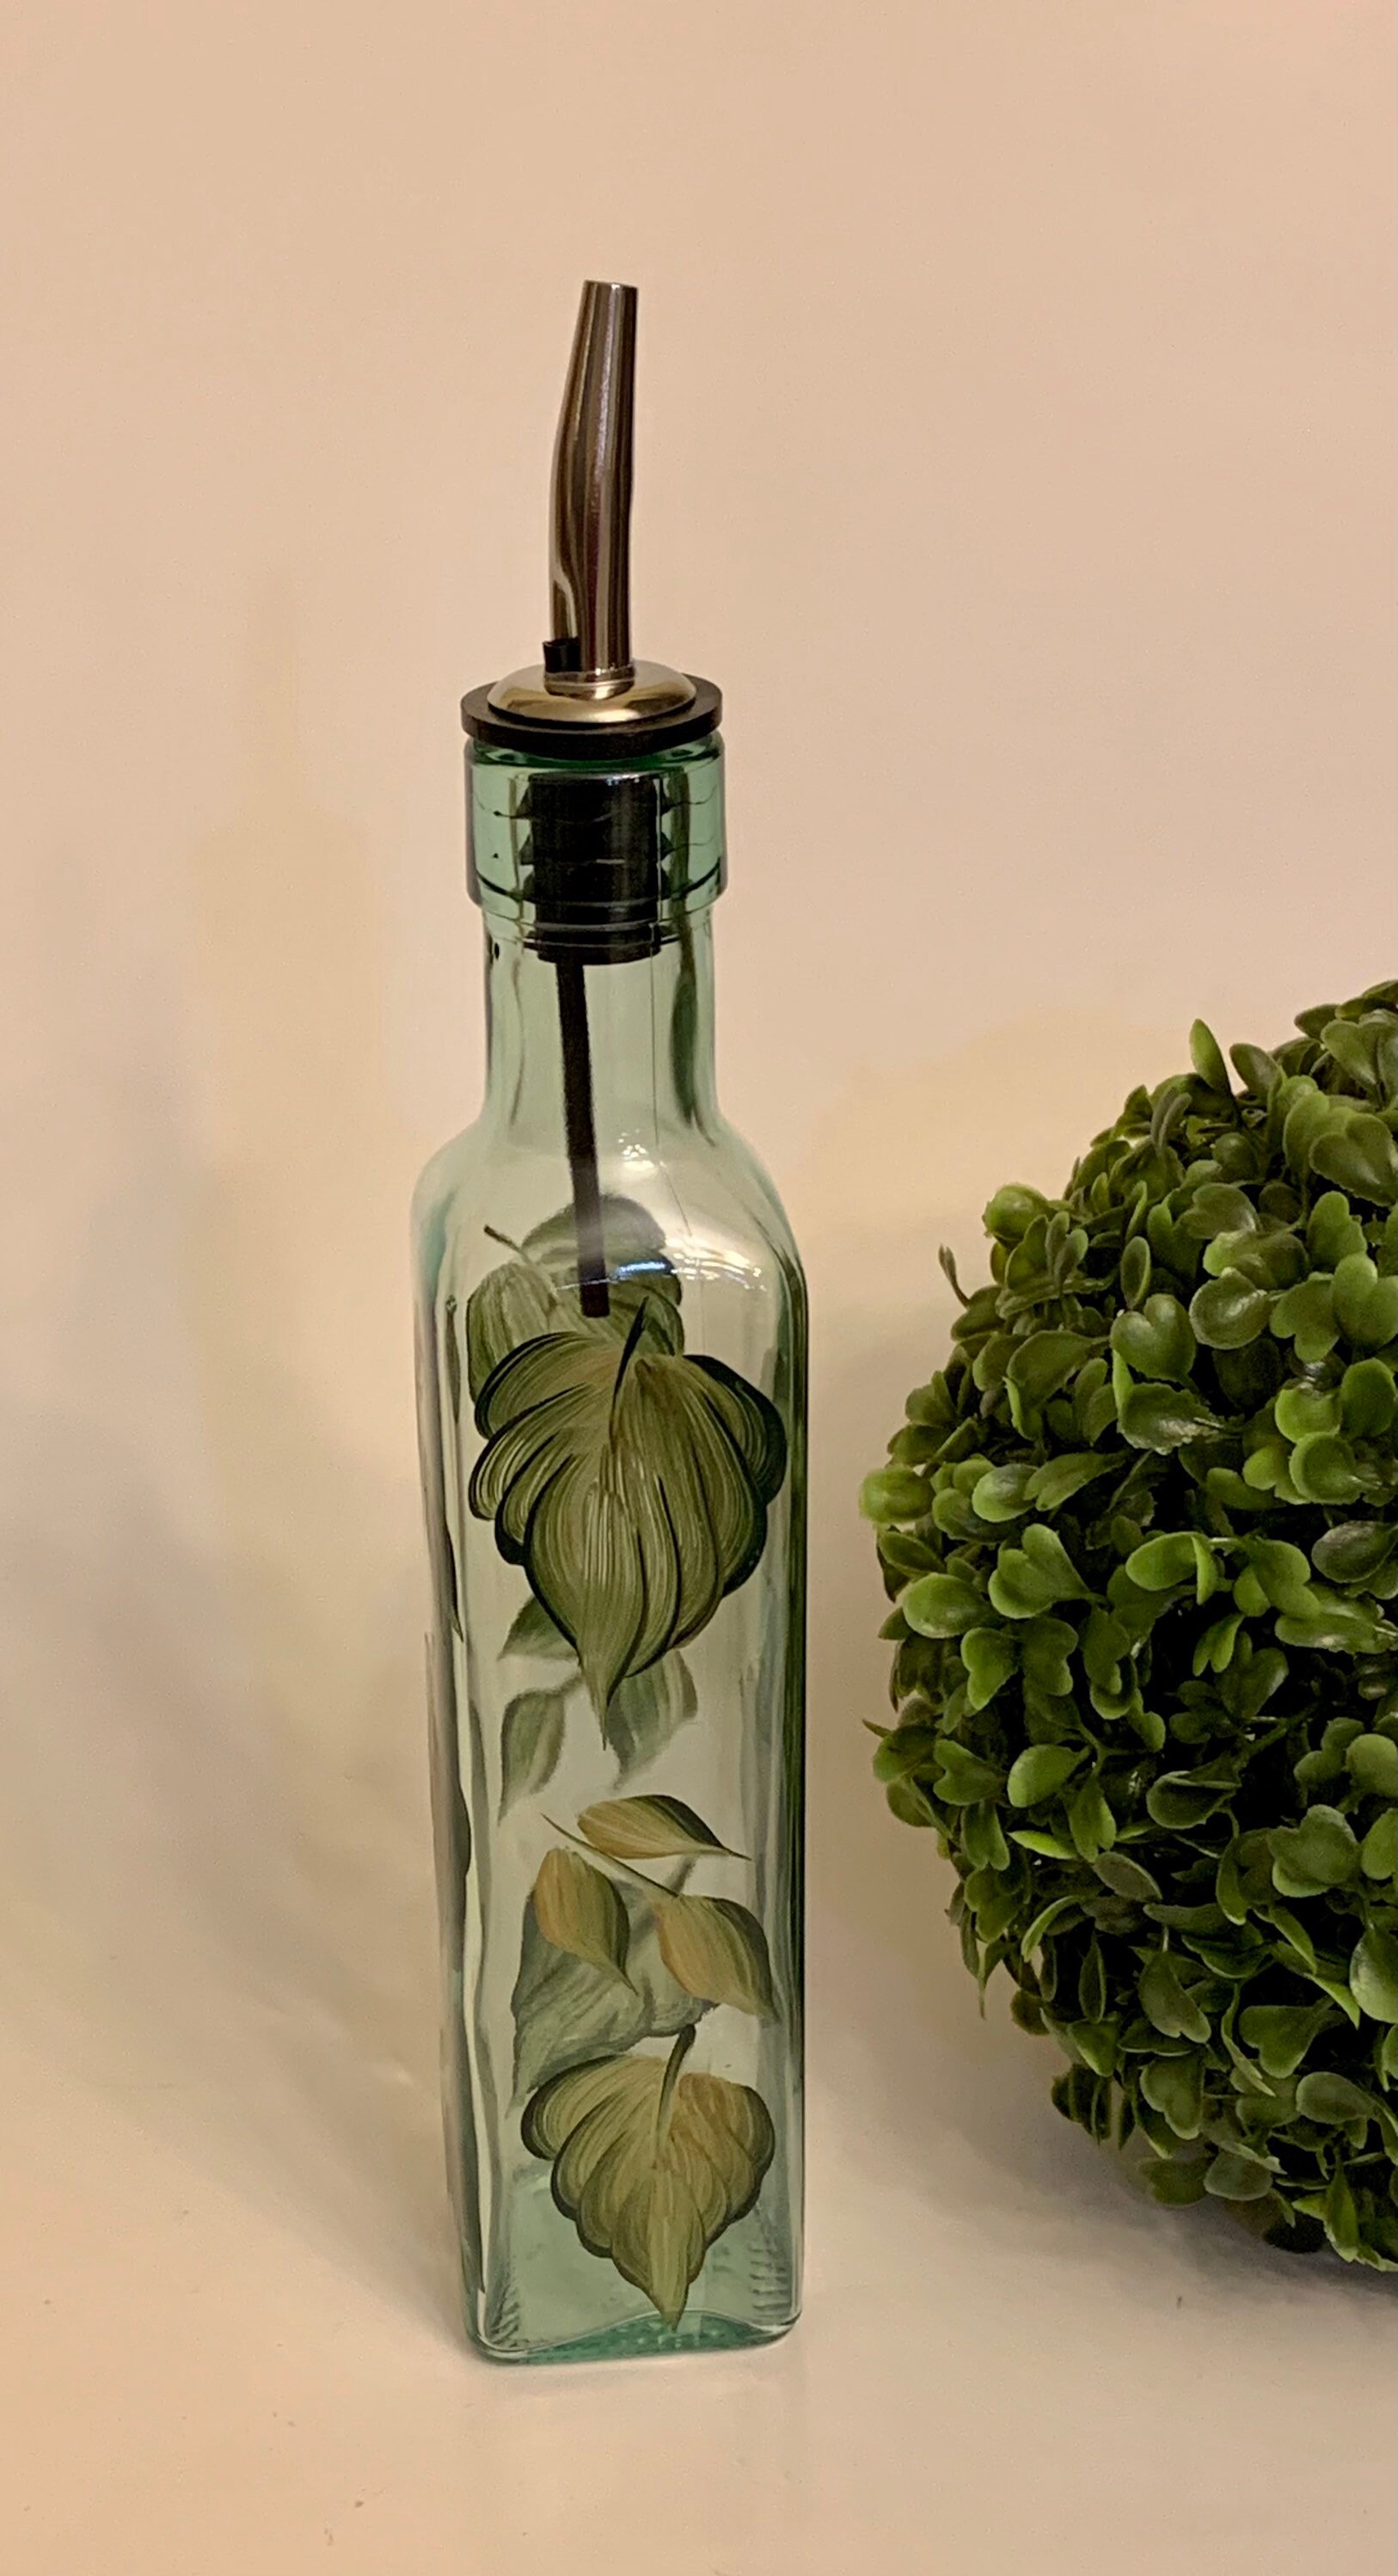 Cestari Original Salad Dressing Shaker: Borosilicate Glass Bottle with Mixer Insert, Leak-Proof Salad Dressing Blender and Dispenser with Measurements